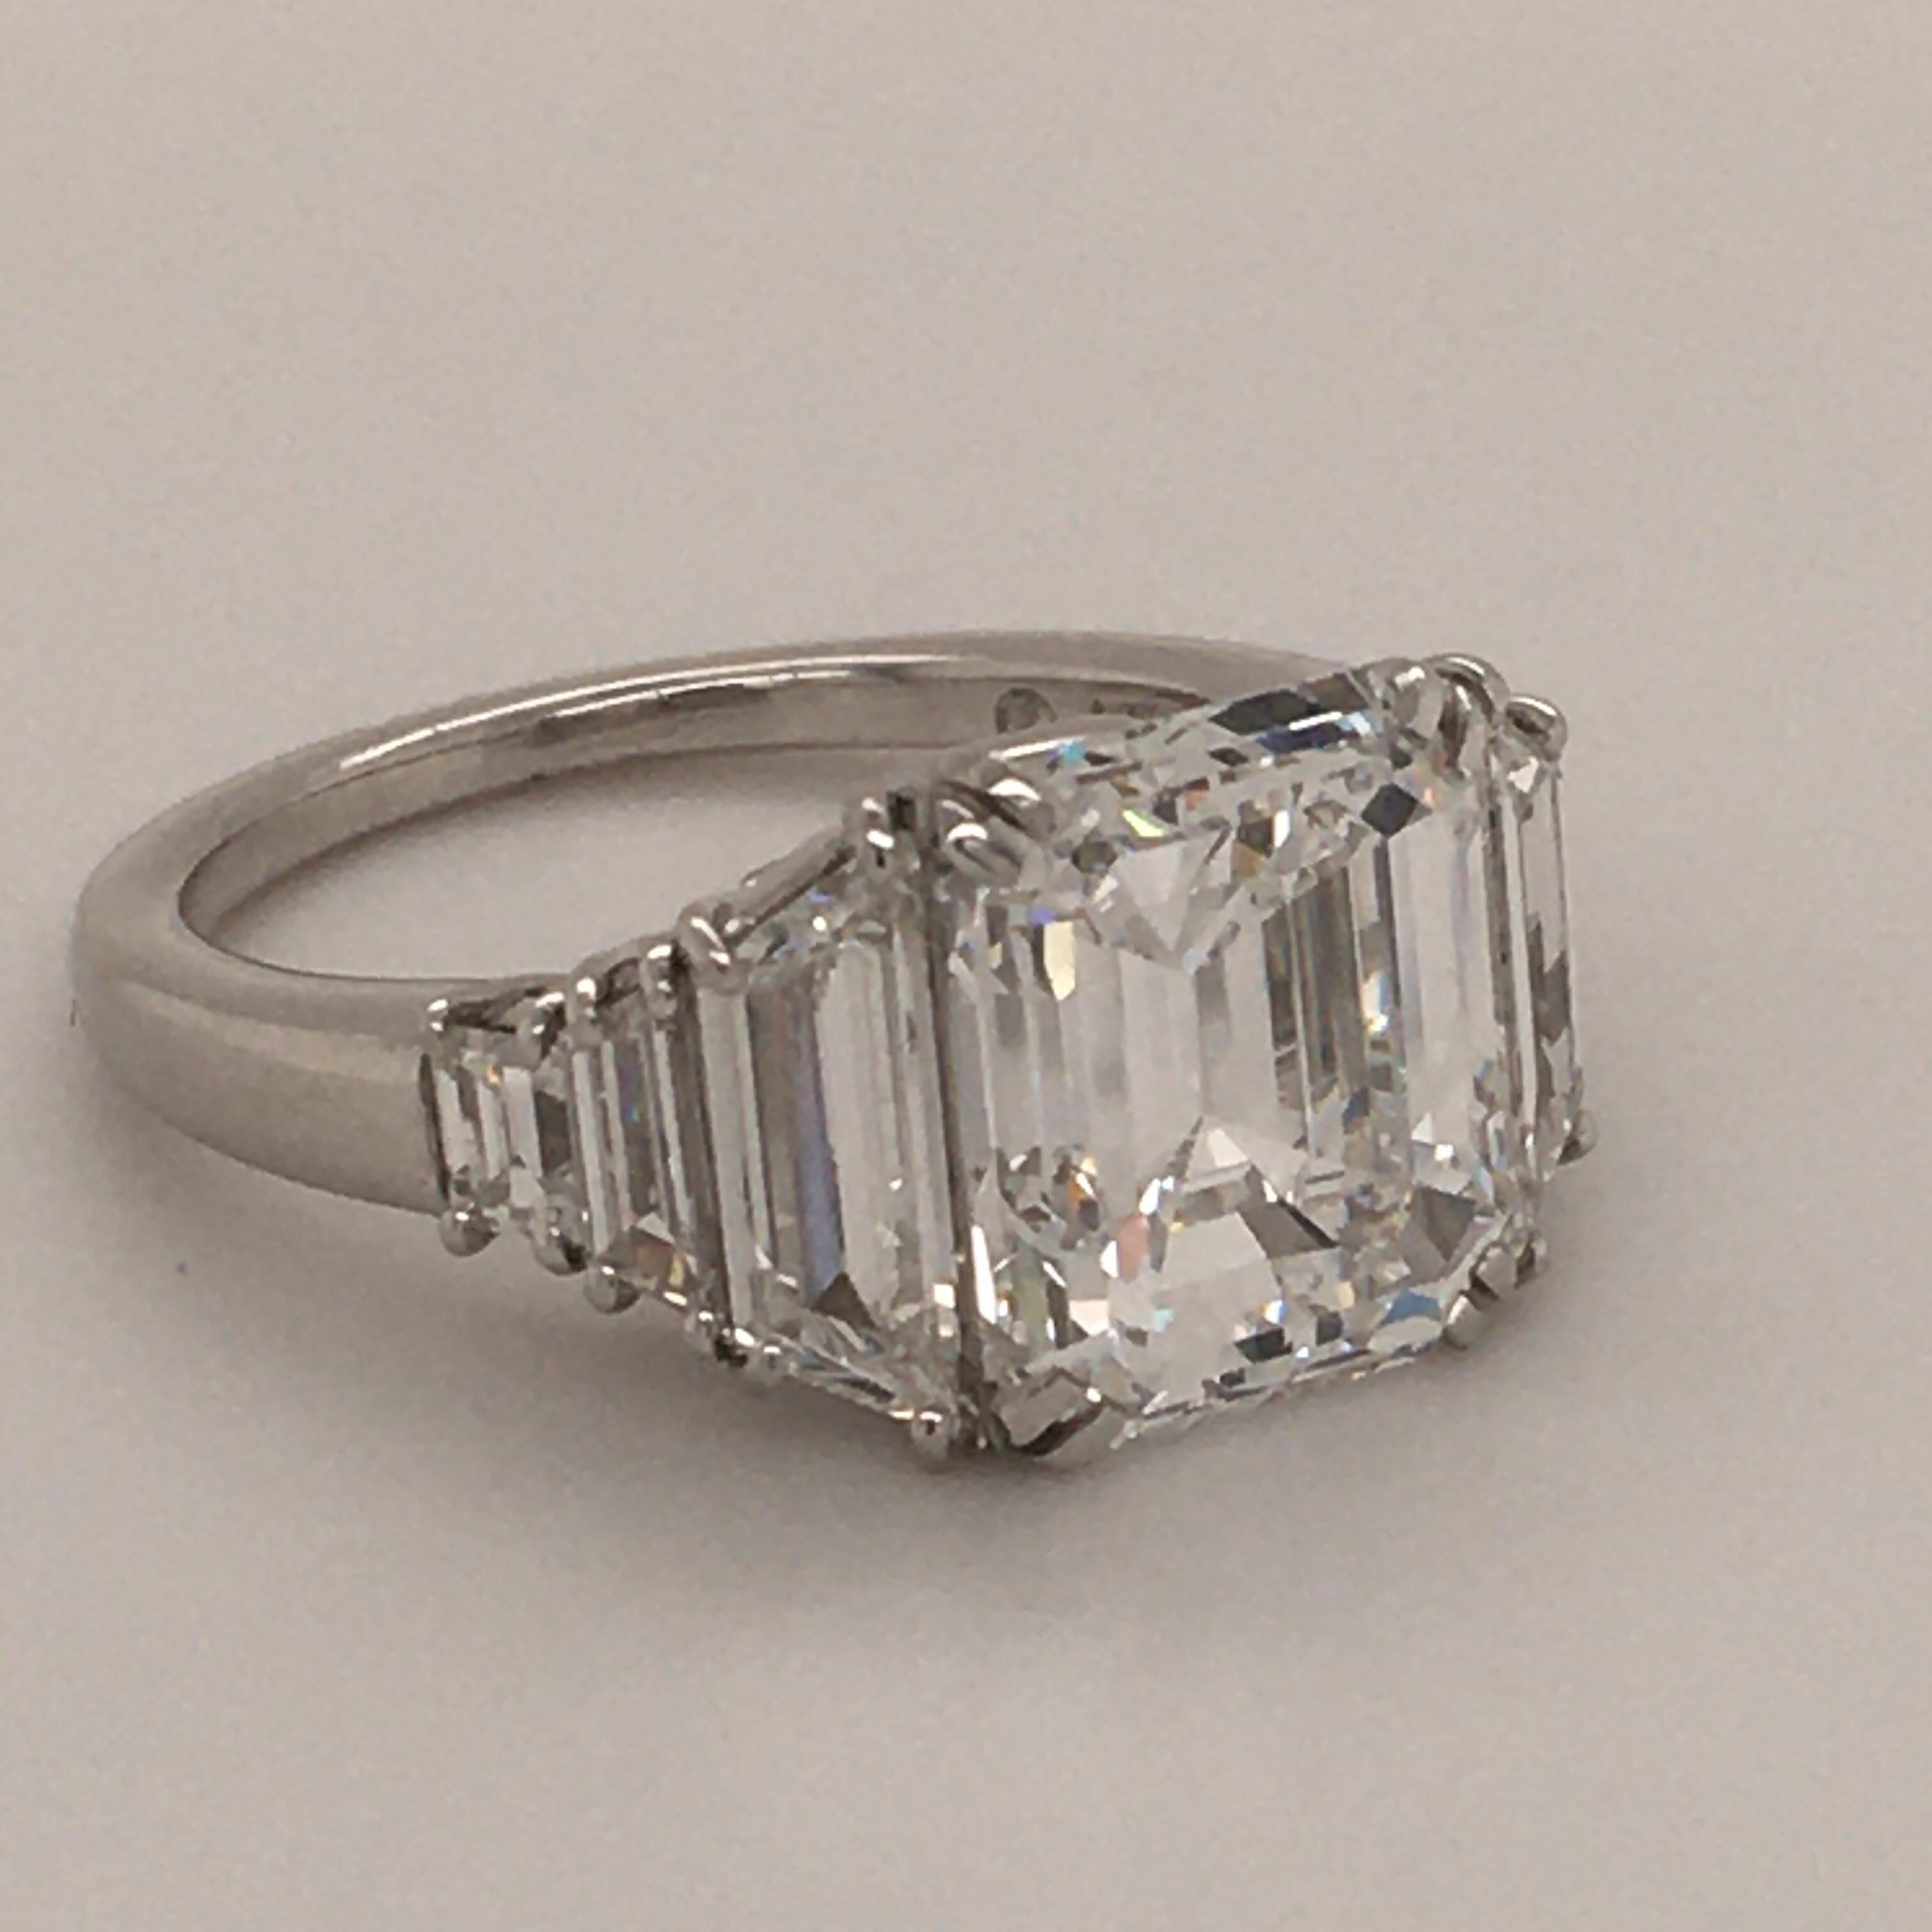 Women's or Men's Harry Winston GIA Certified 4.63 Carat Emerald Cut Diamond Ring in Platinum 950 For Sale